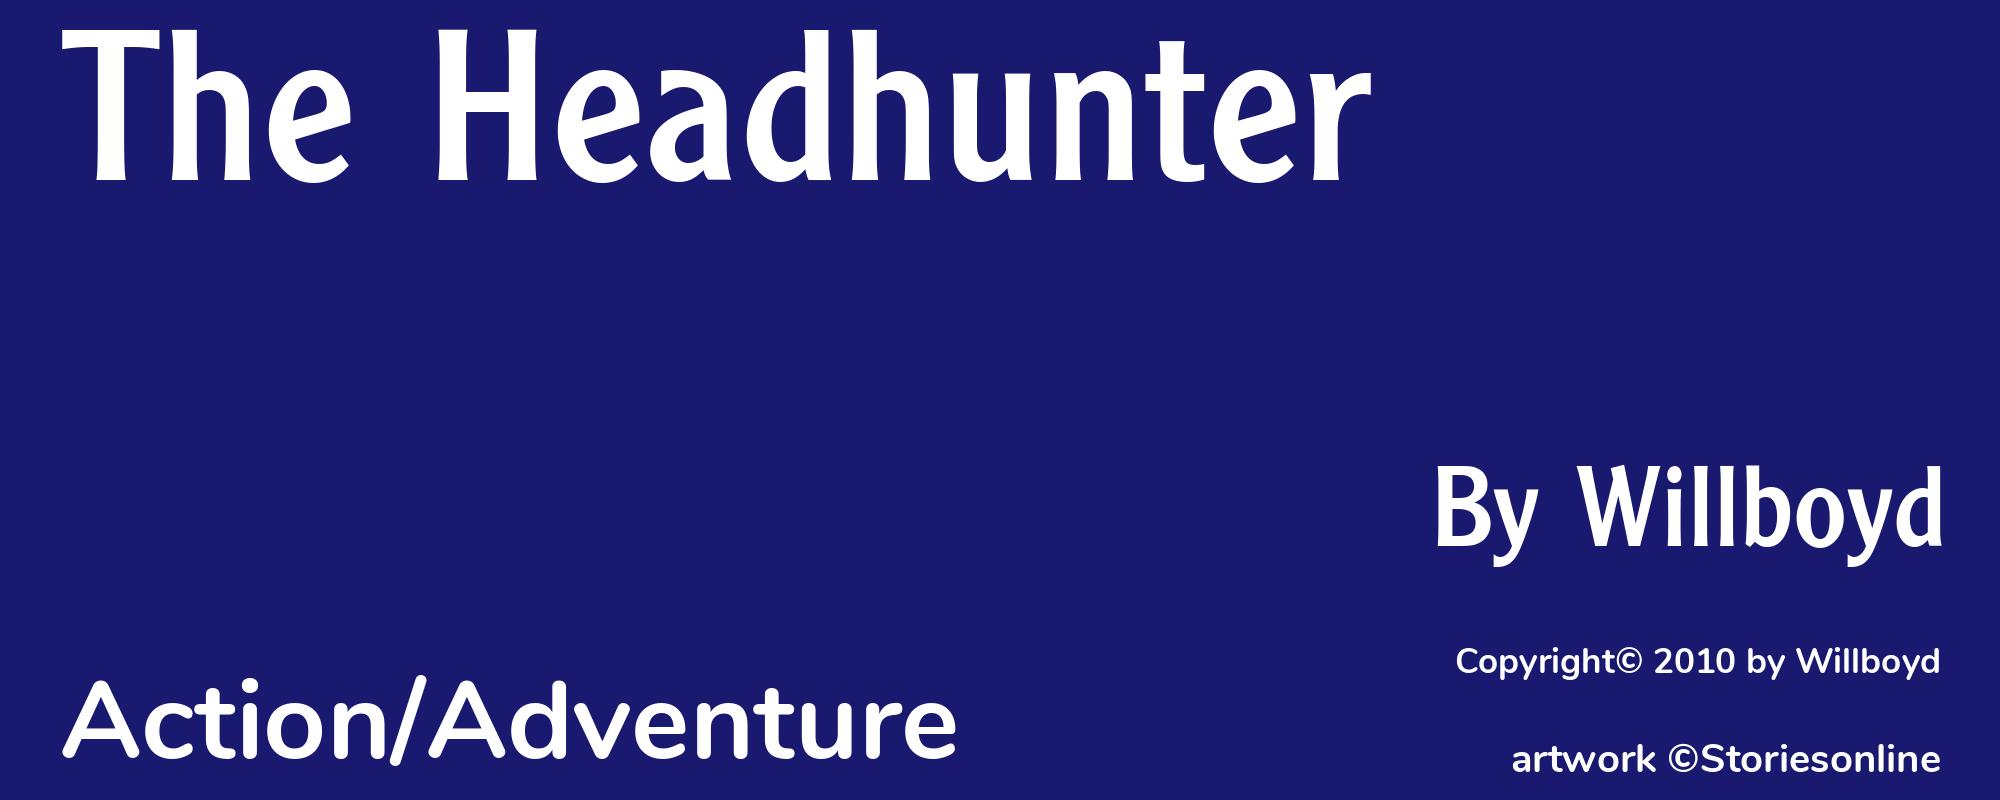 The Headhunter - Cover